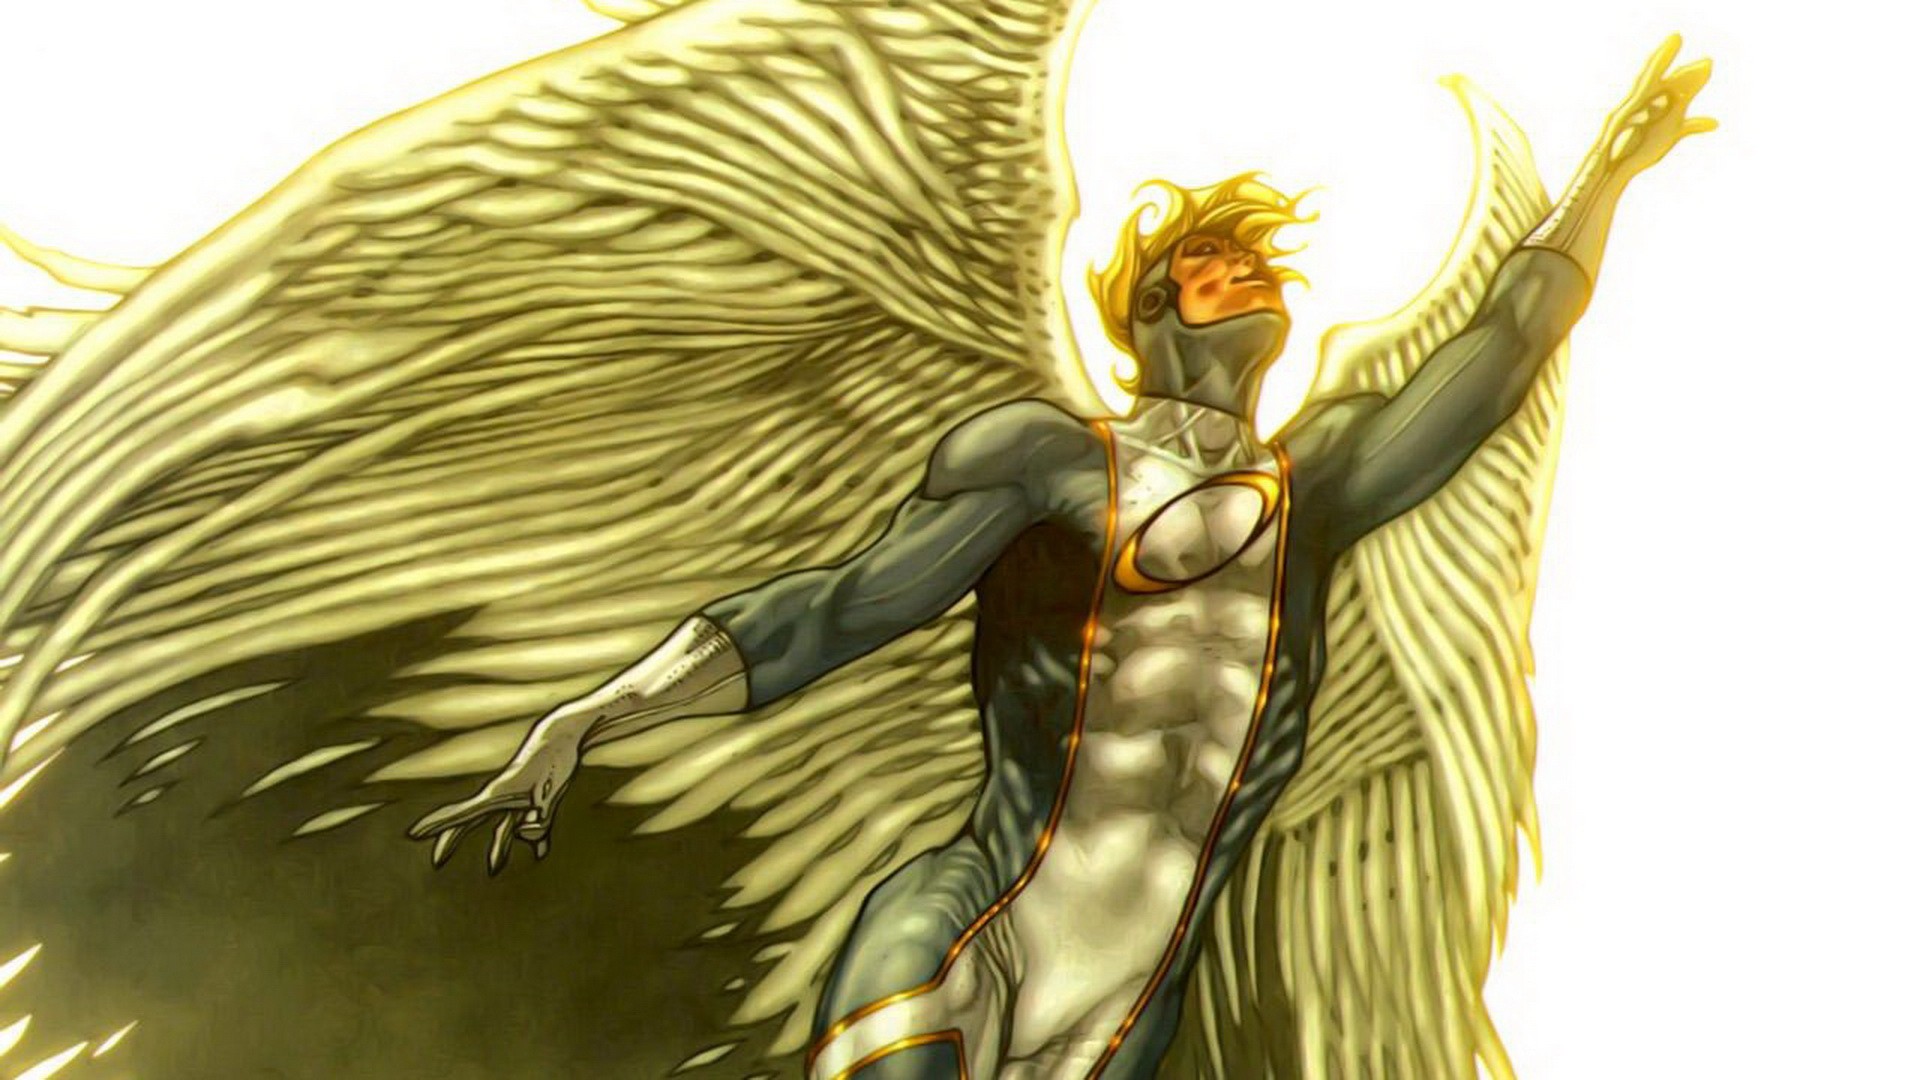 Marvel Archangel Wallpaper